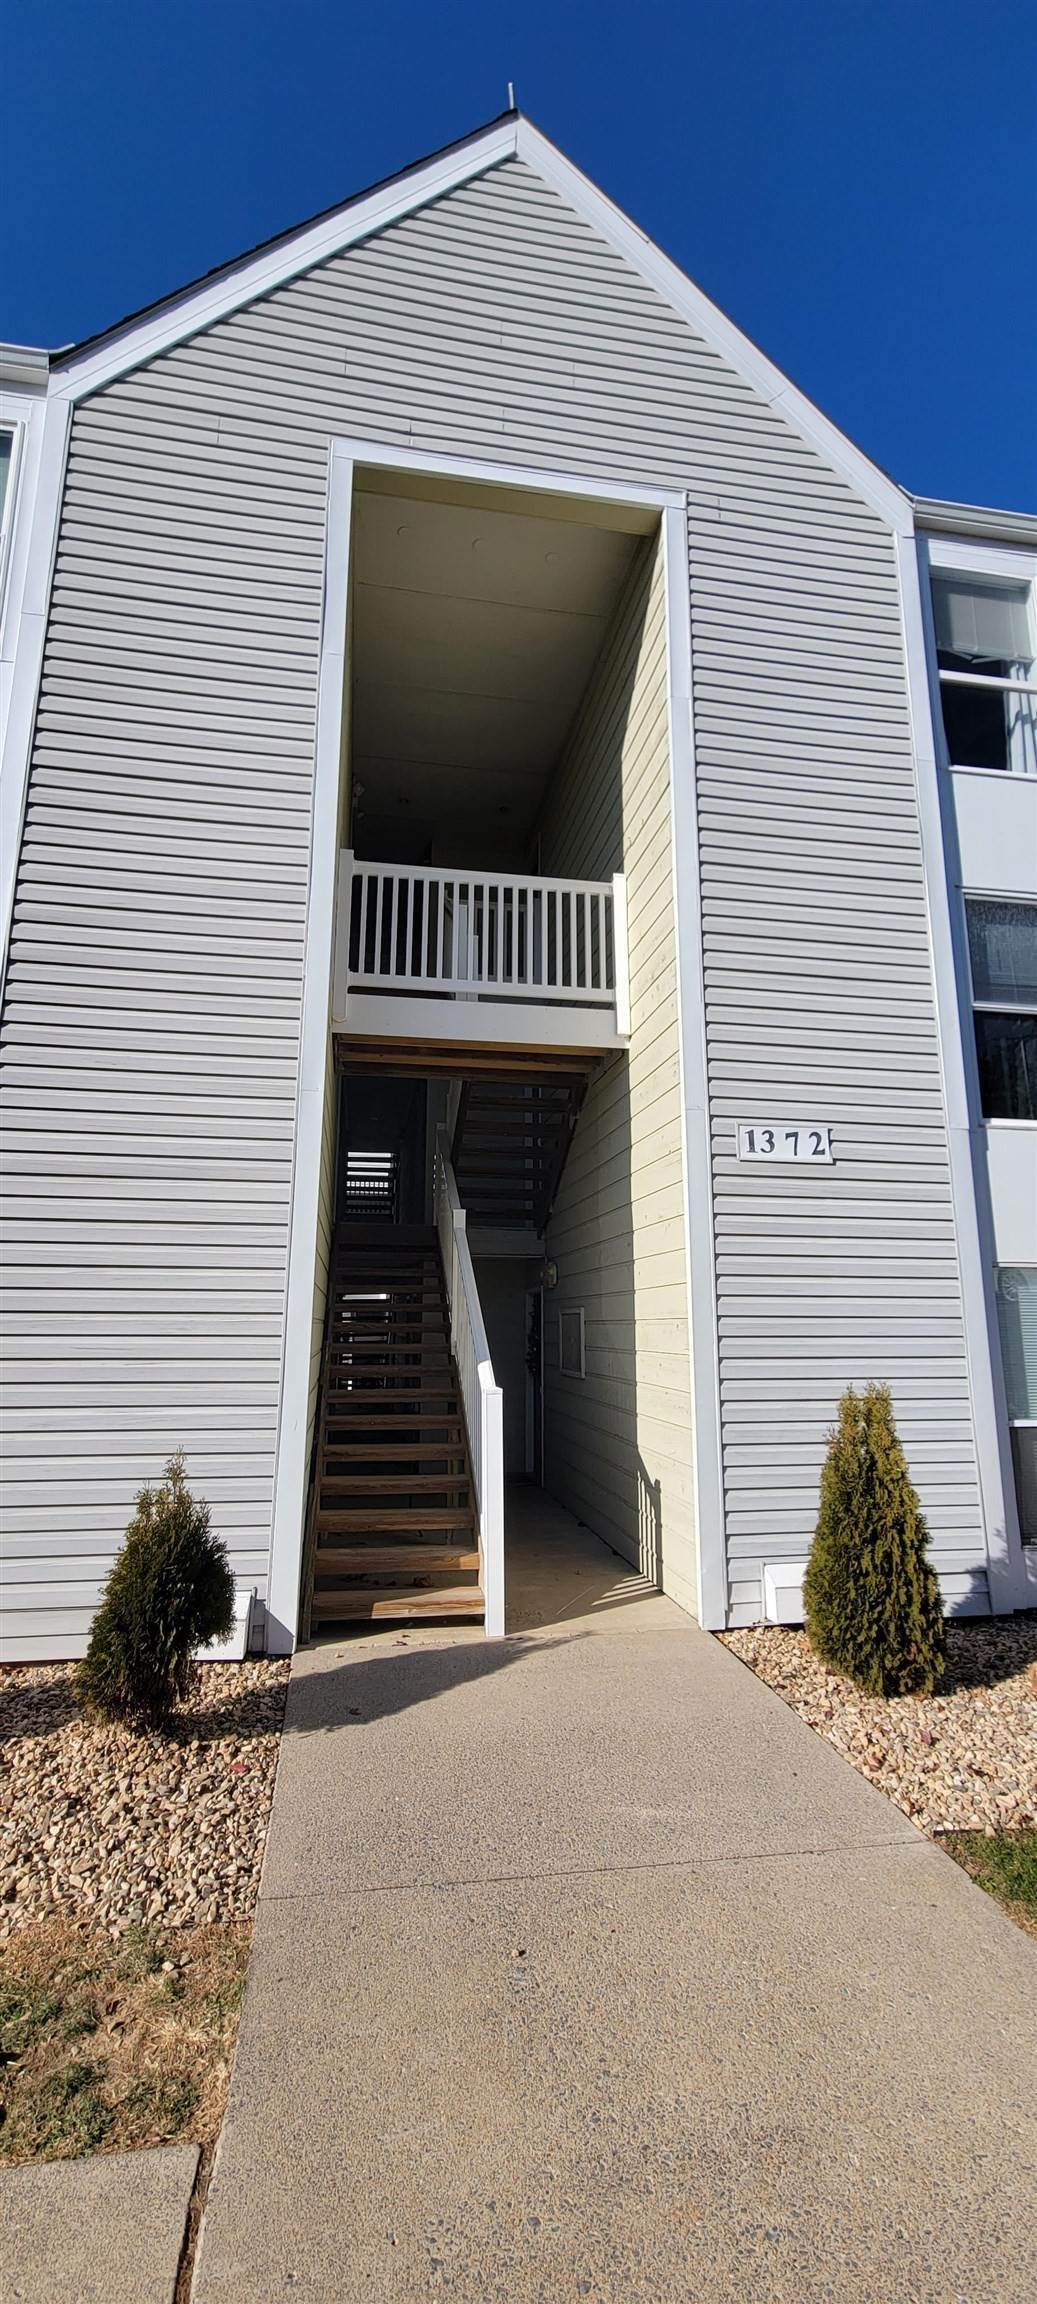 7. Condominiums for Sale at 1372 HUNTERS RD #E Harrisonburg, Virginia 22801 United States